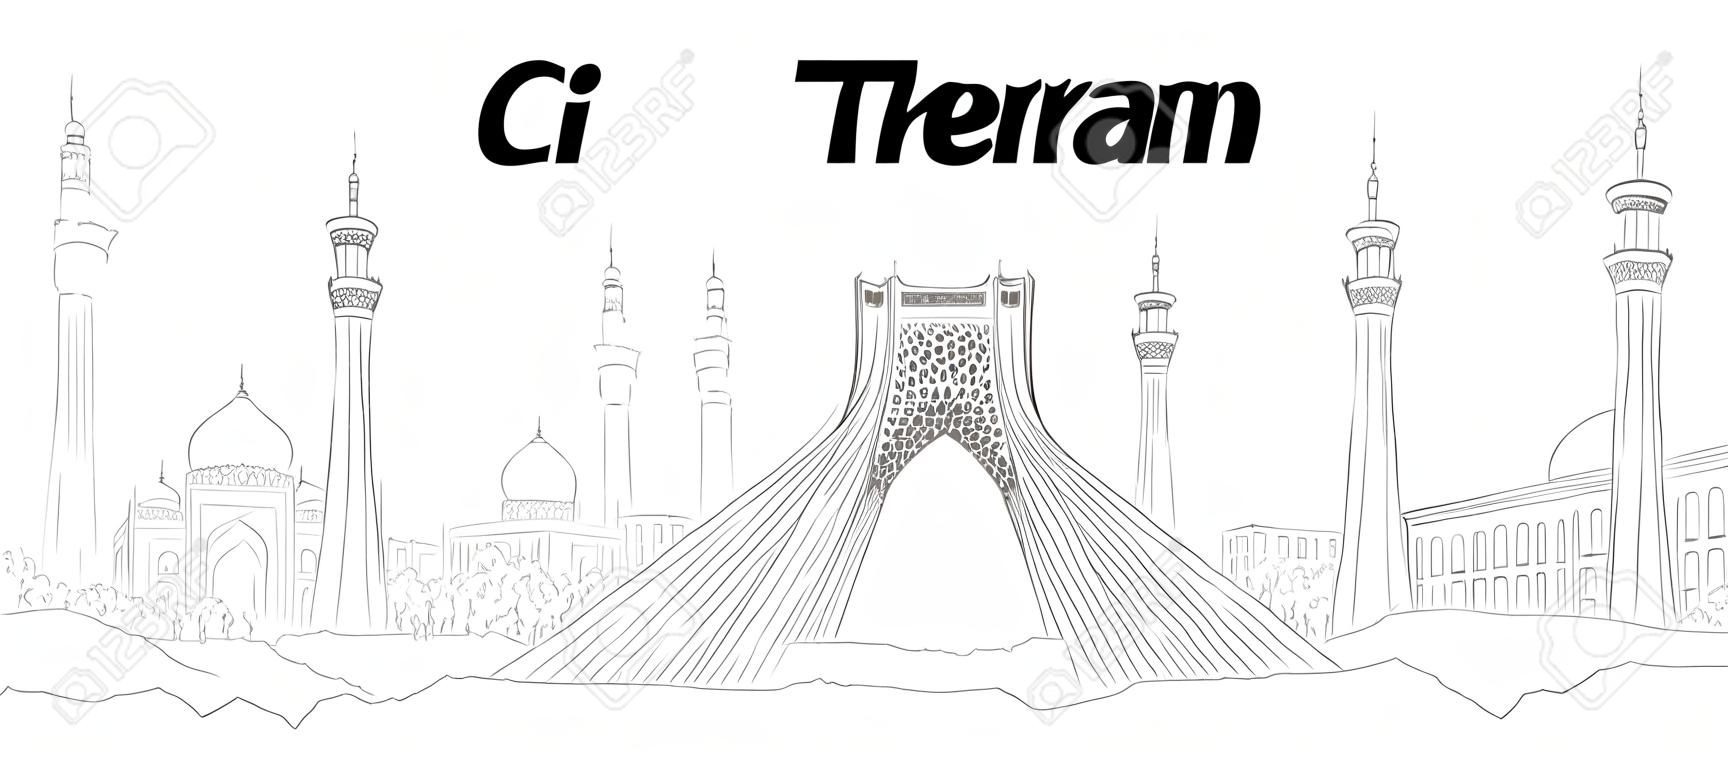 Tehran CITY city vector panoramic hand drawing illustration